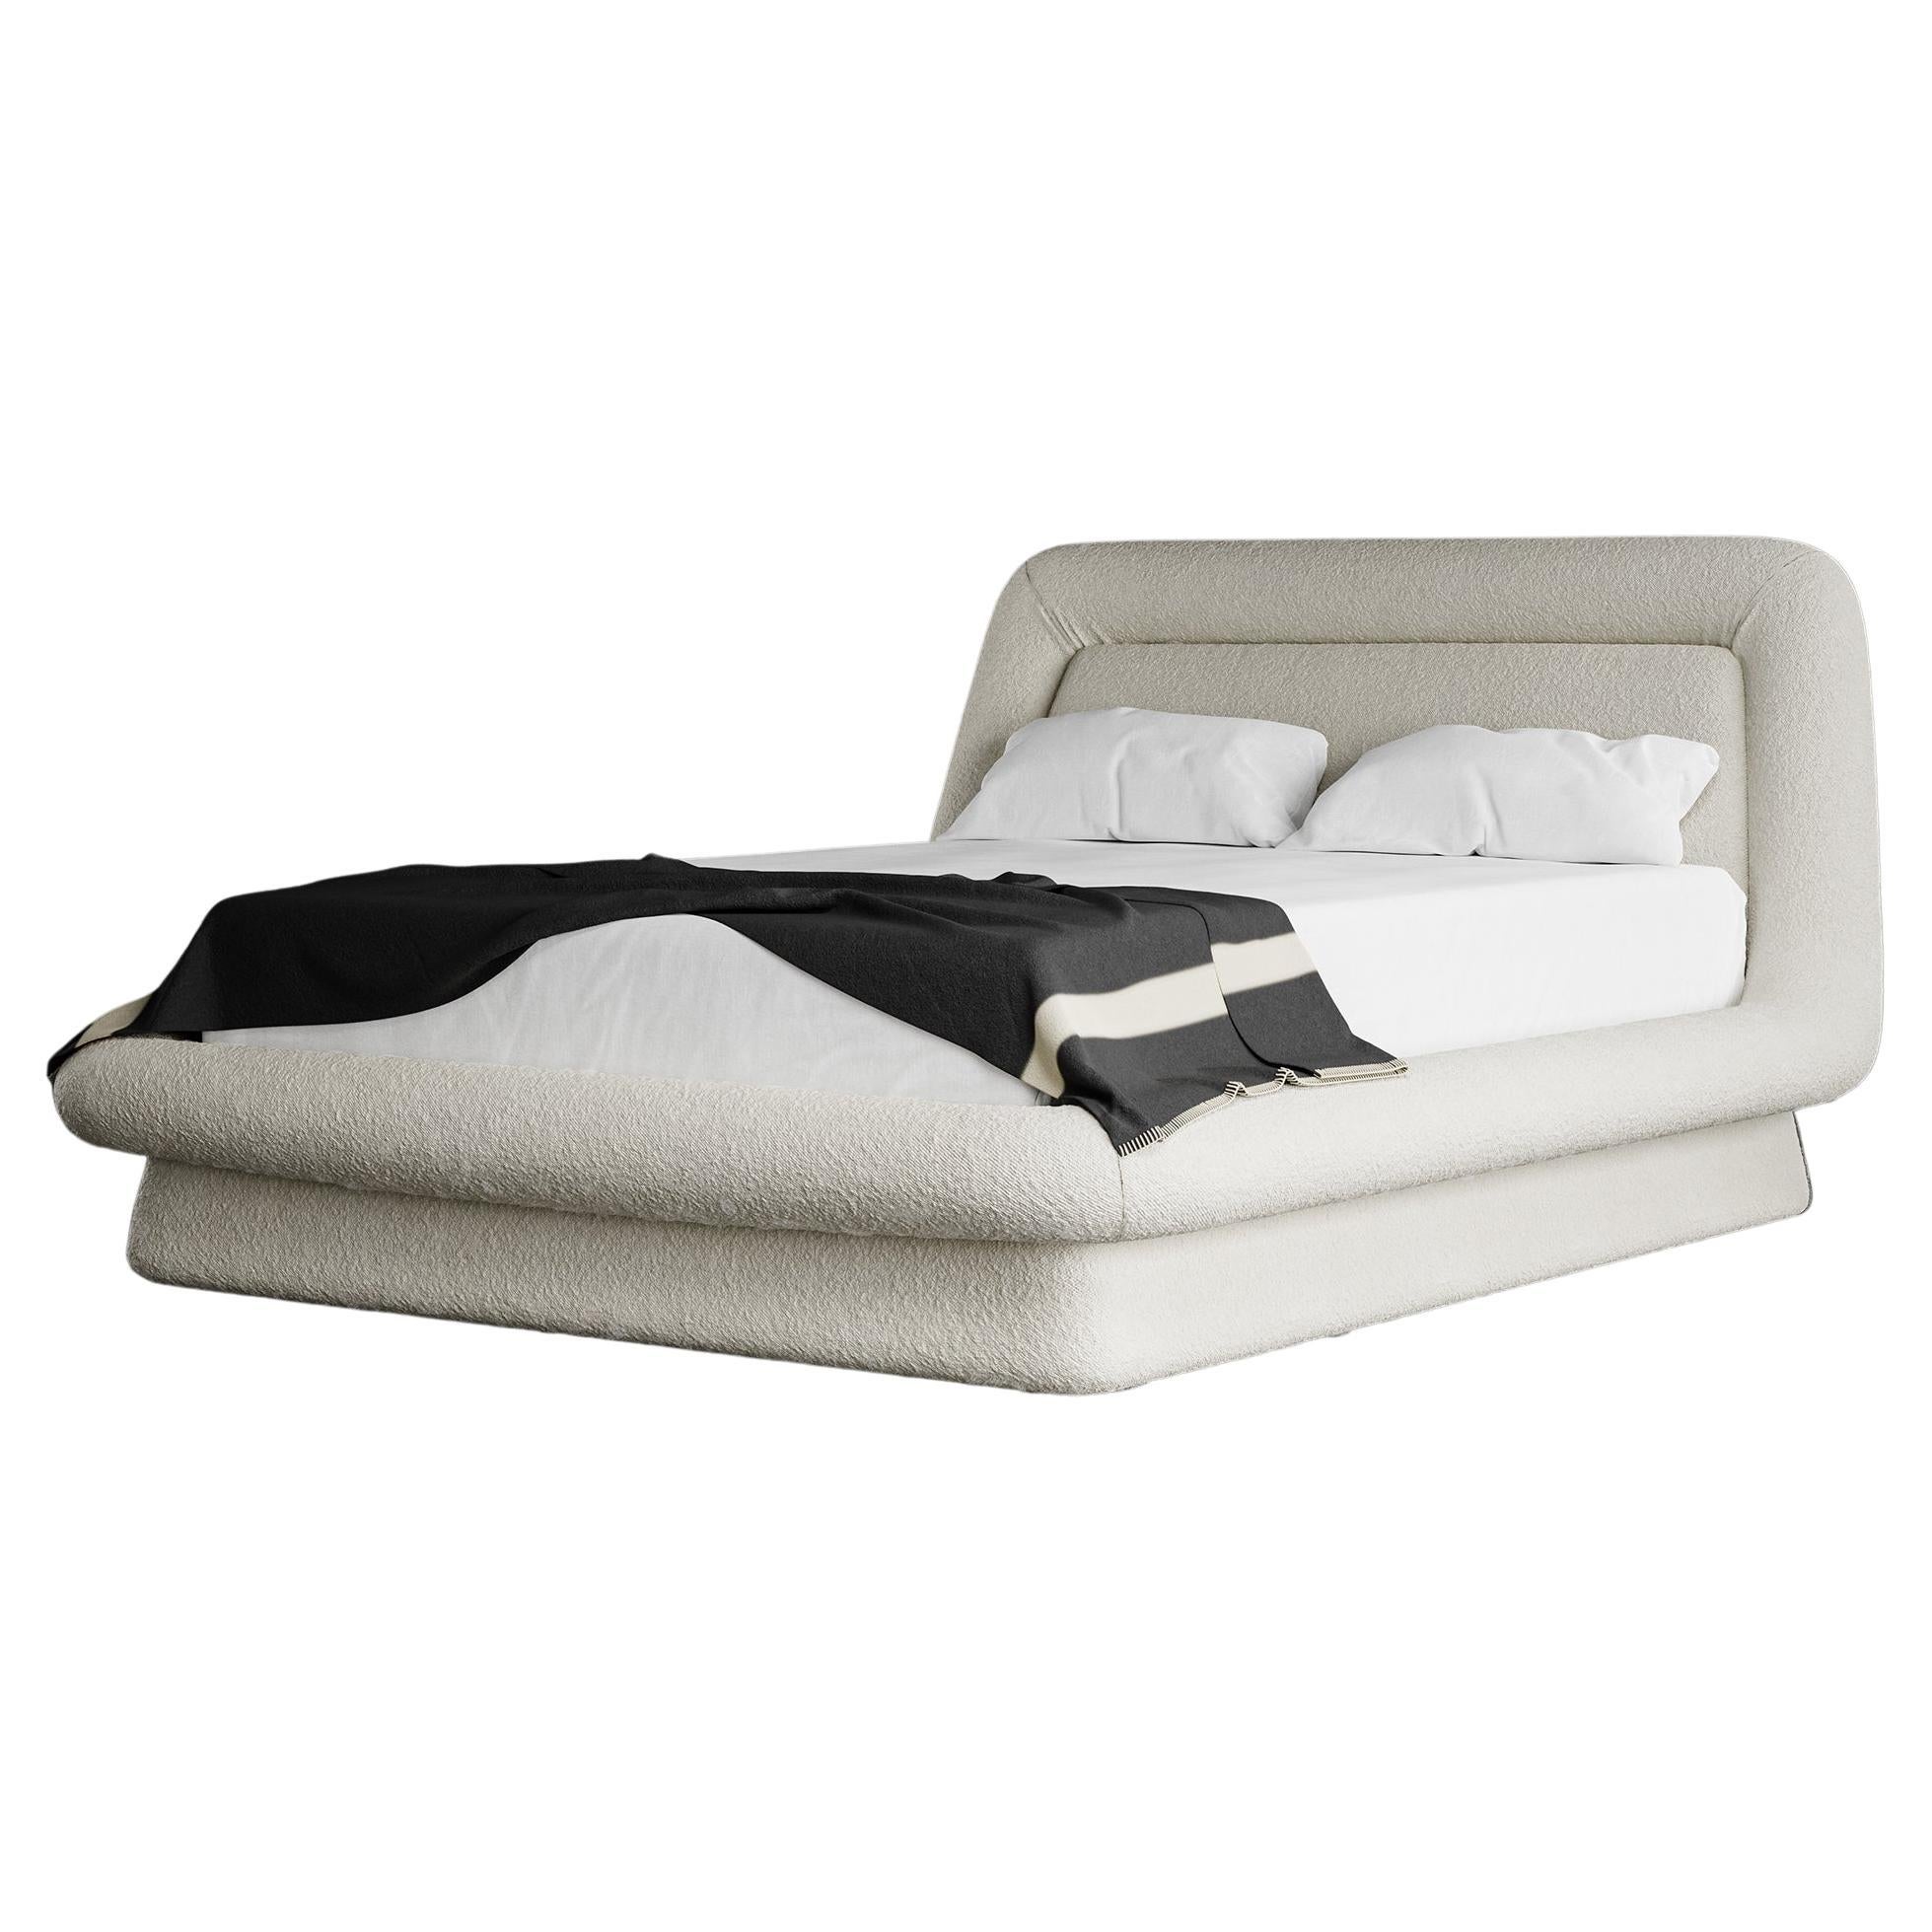 Modernes Wave-Bett aus Cloud-Boucle in warmem Weiß